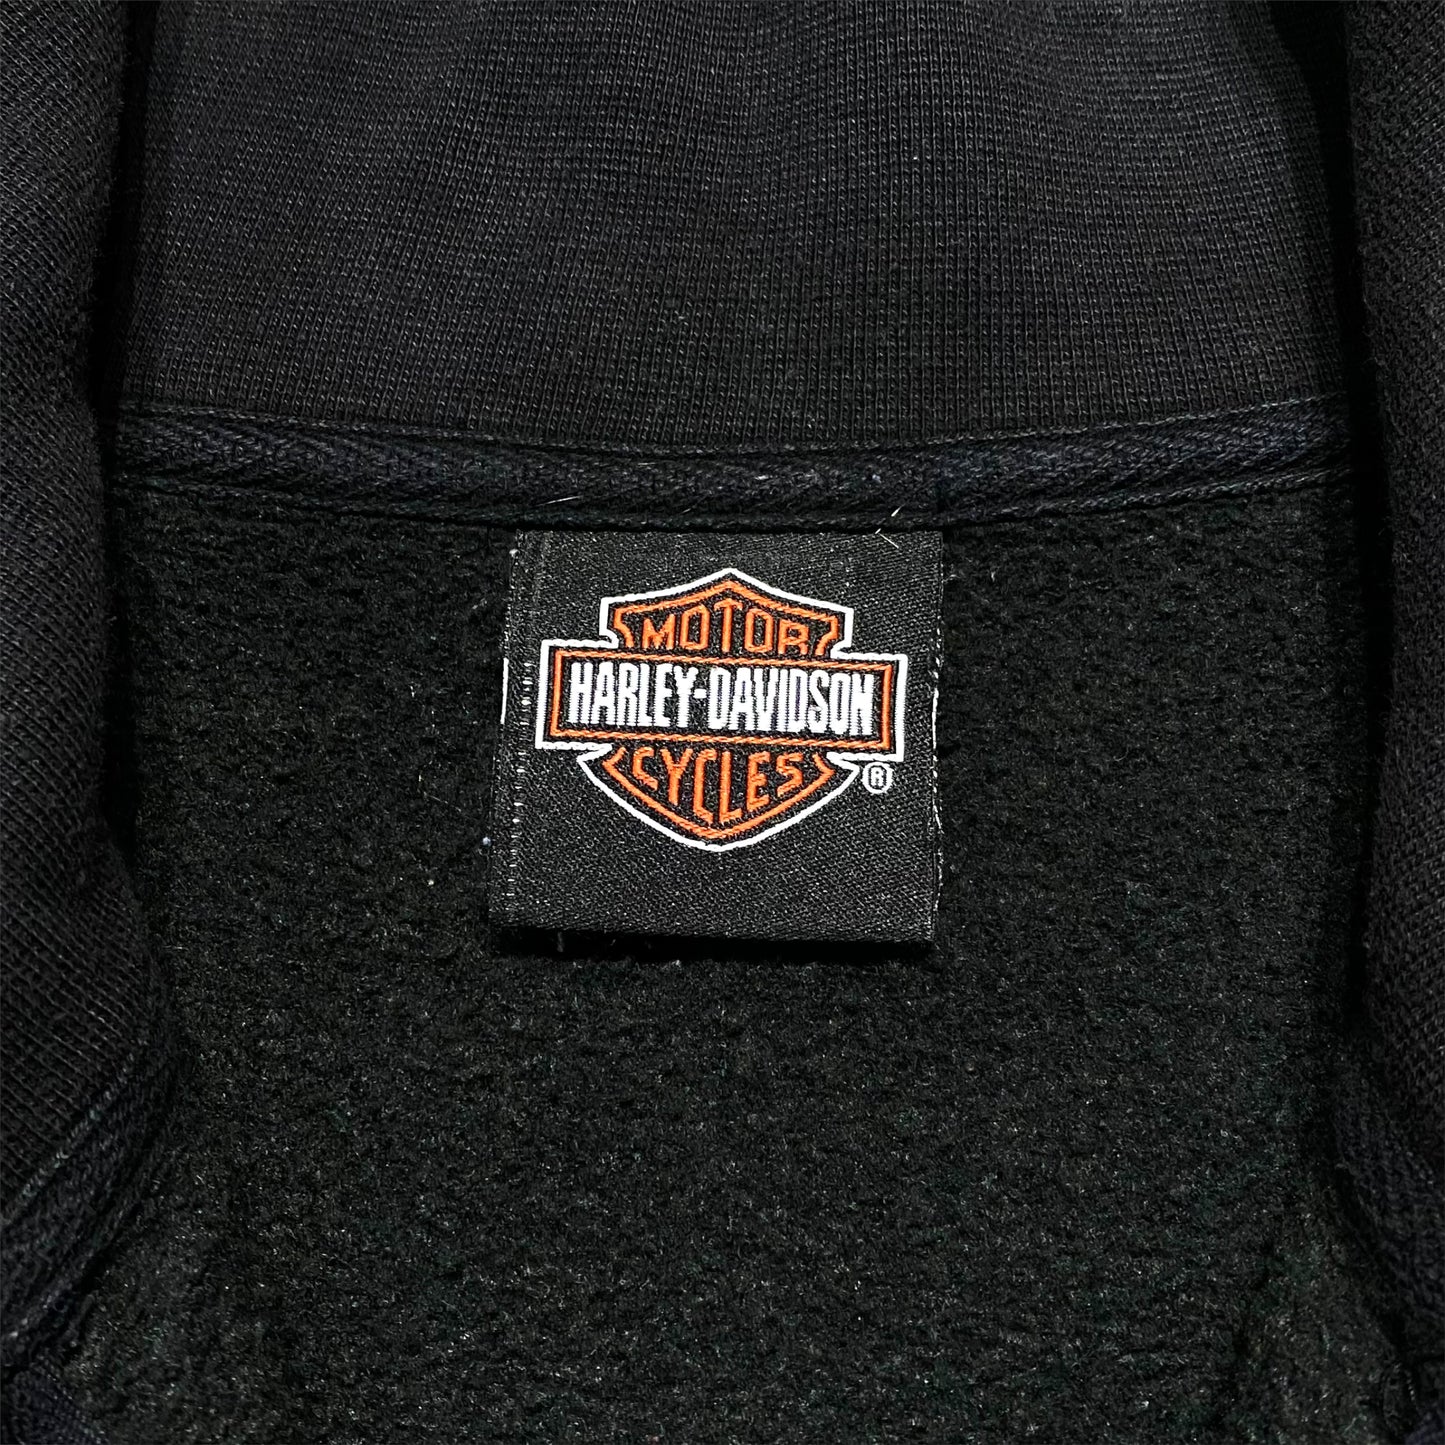 00's "Harley-Davidson" Half zip sweat